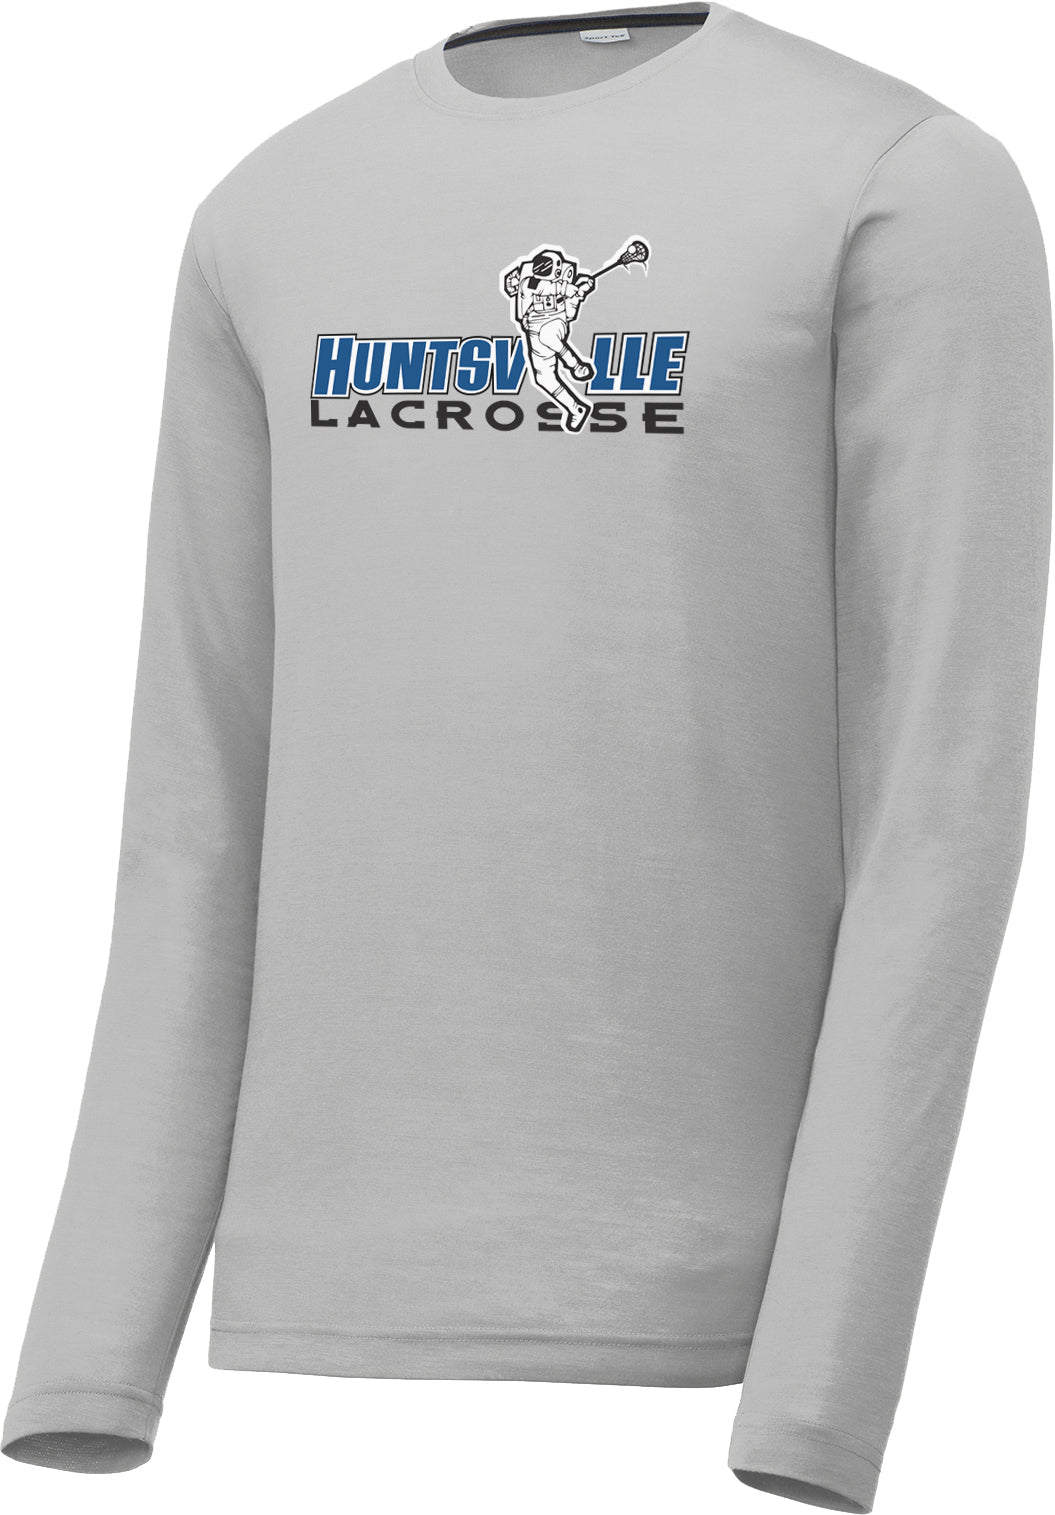 Huntsville Lacrosse Silver Long Sleeve CottonTouch Performance Shirt